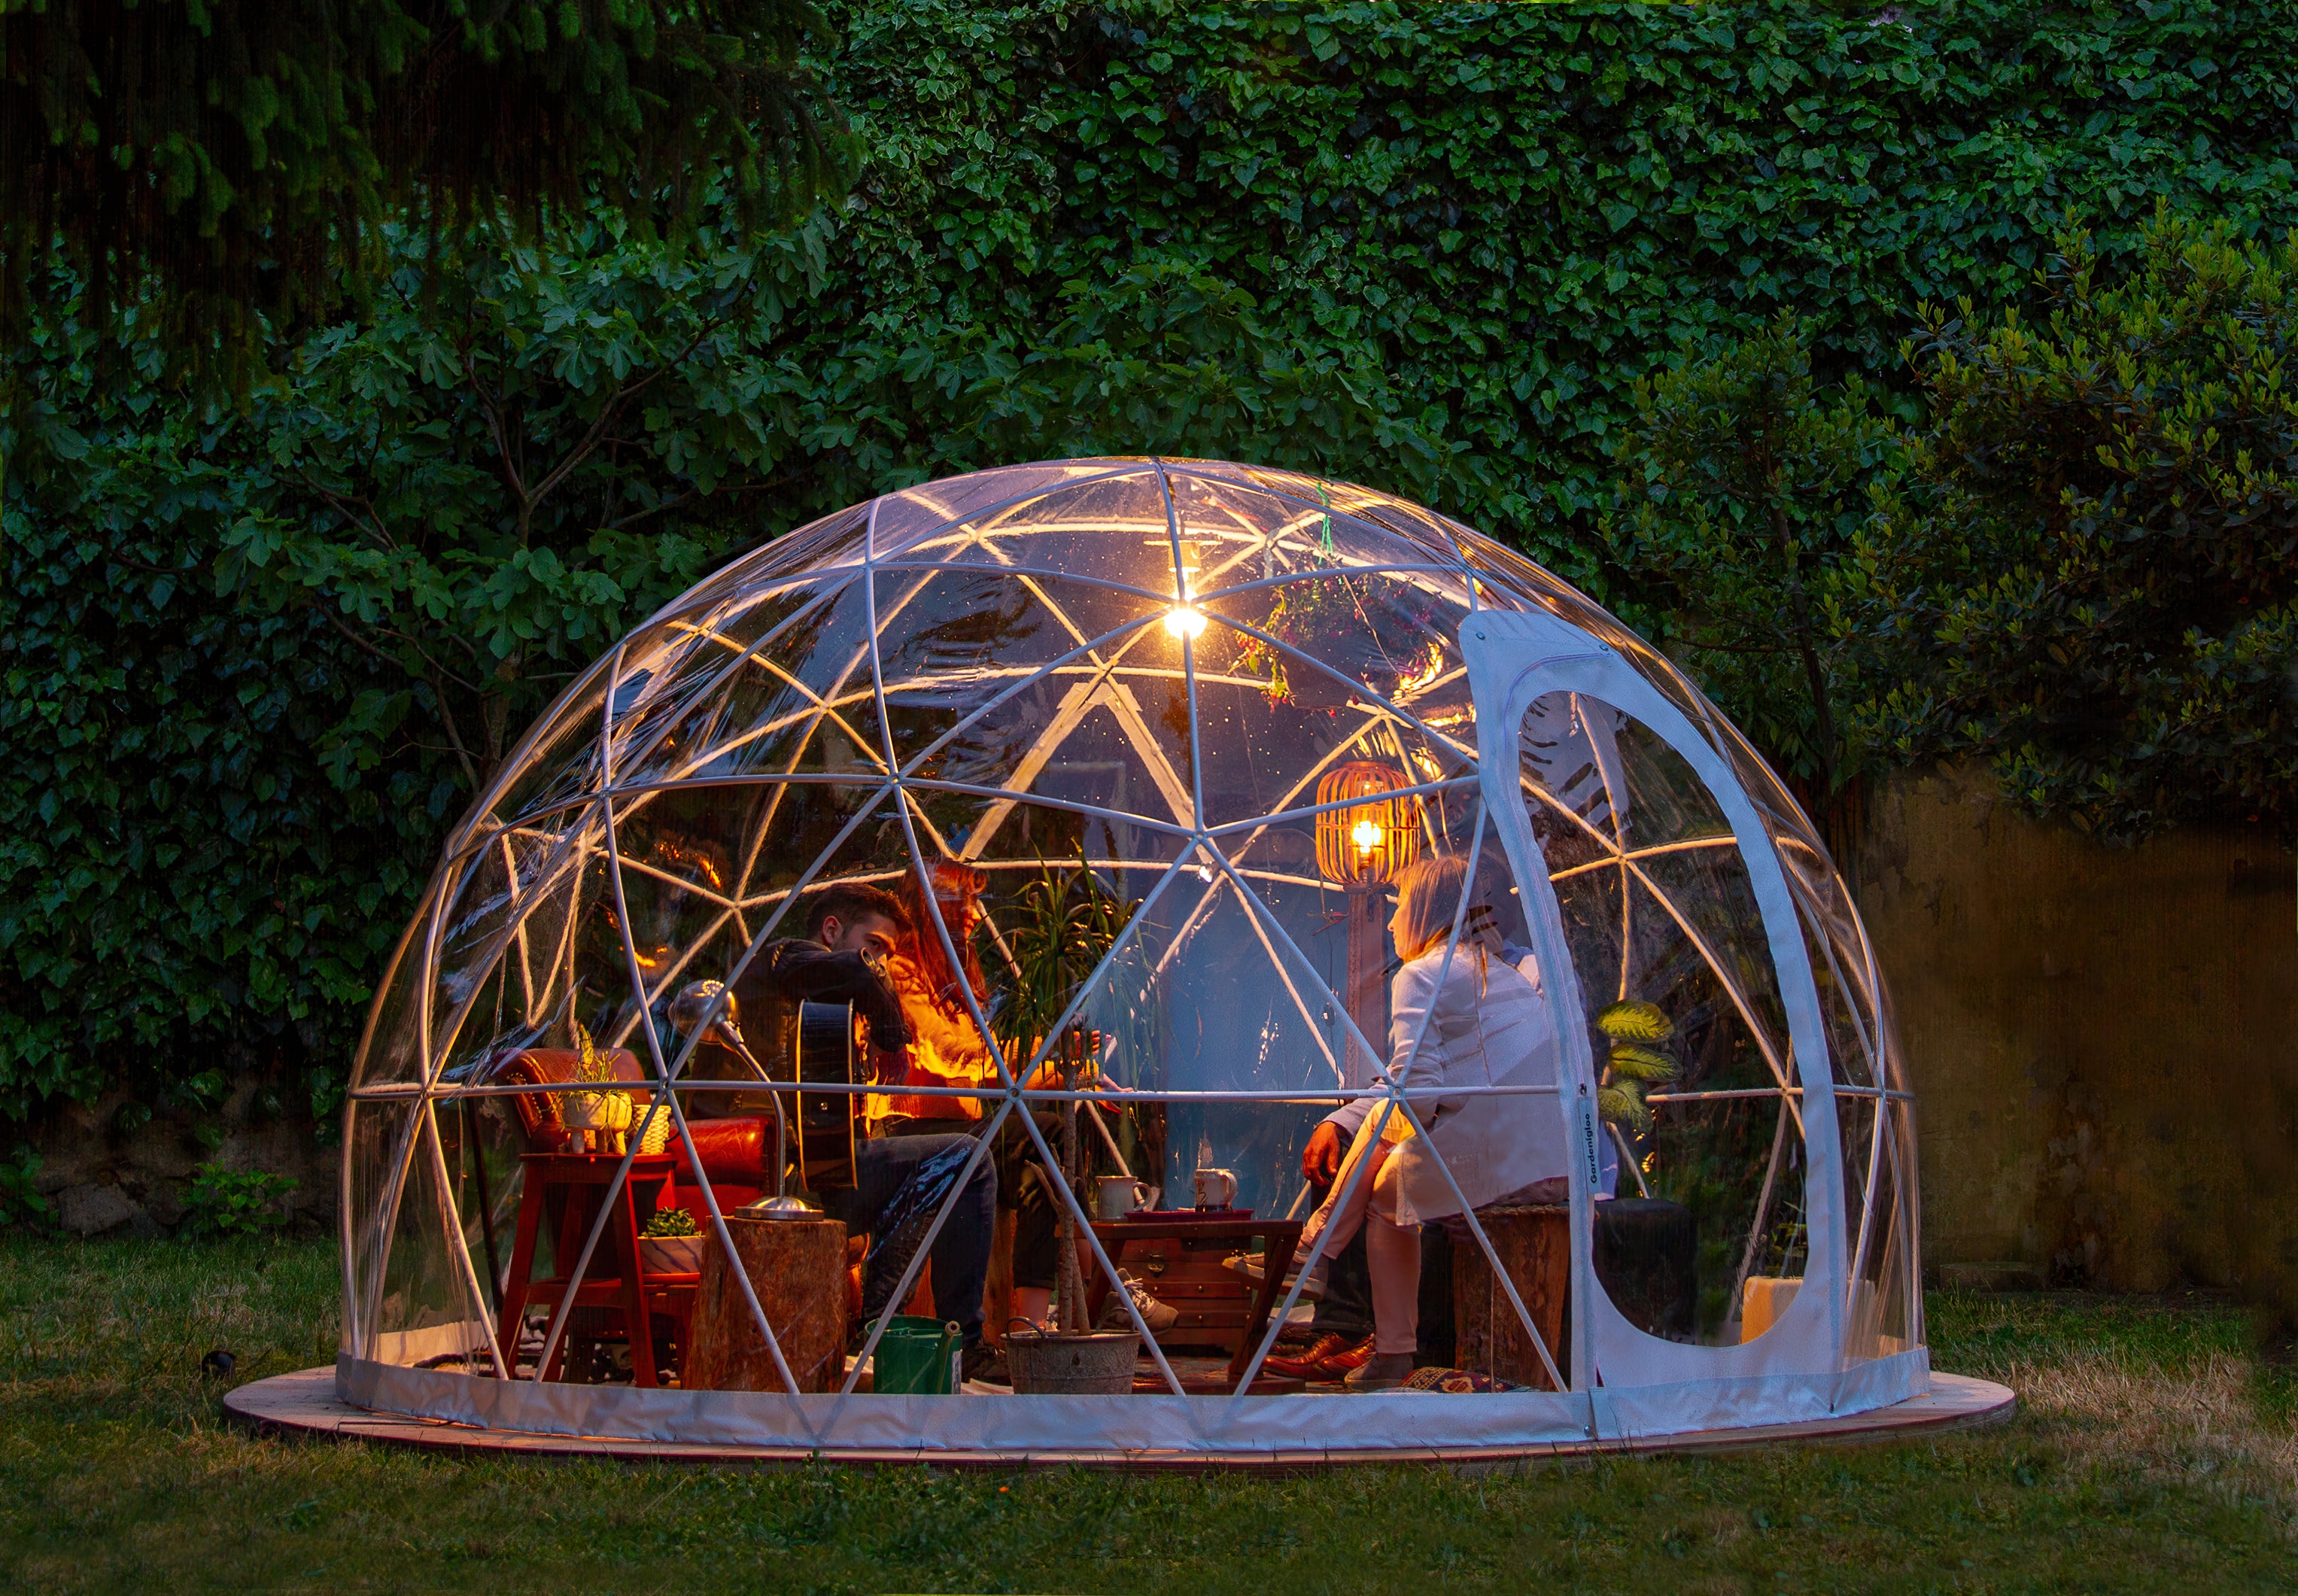 9 Reasons Your Garden Needs A Garden Igloo Dome - Sleek-chic Interiors